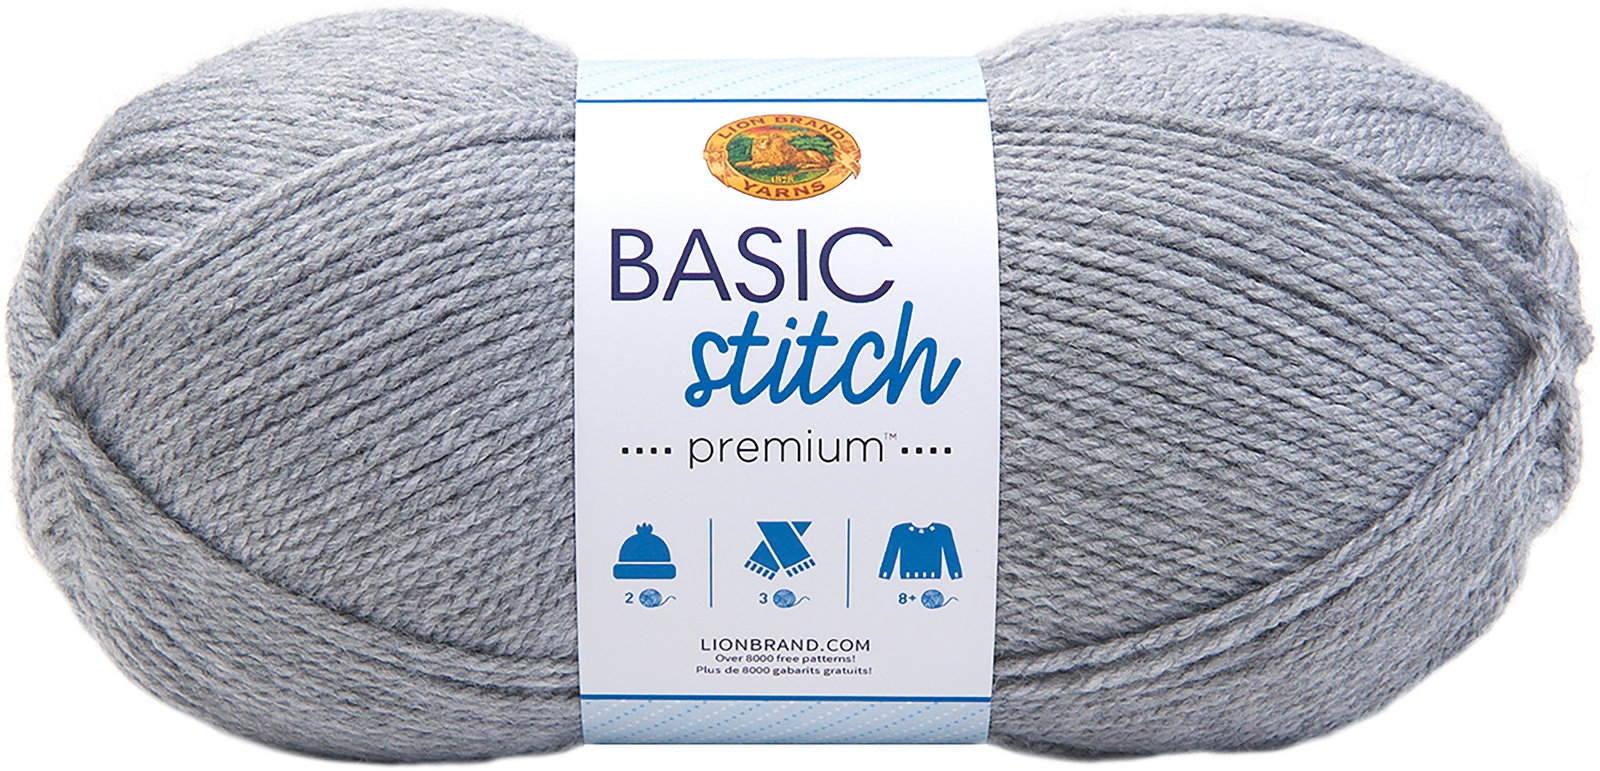 Lion Brand Yarn Basic Stitch Premium-Slate - $20.87